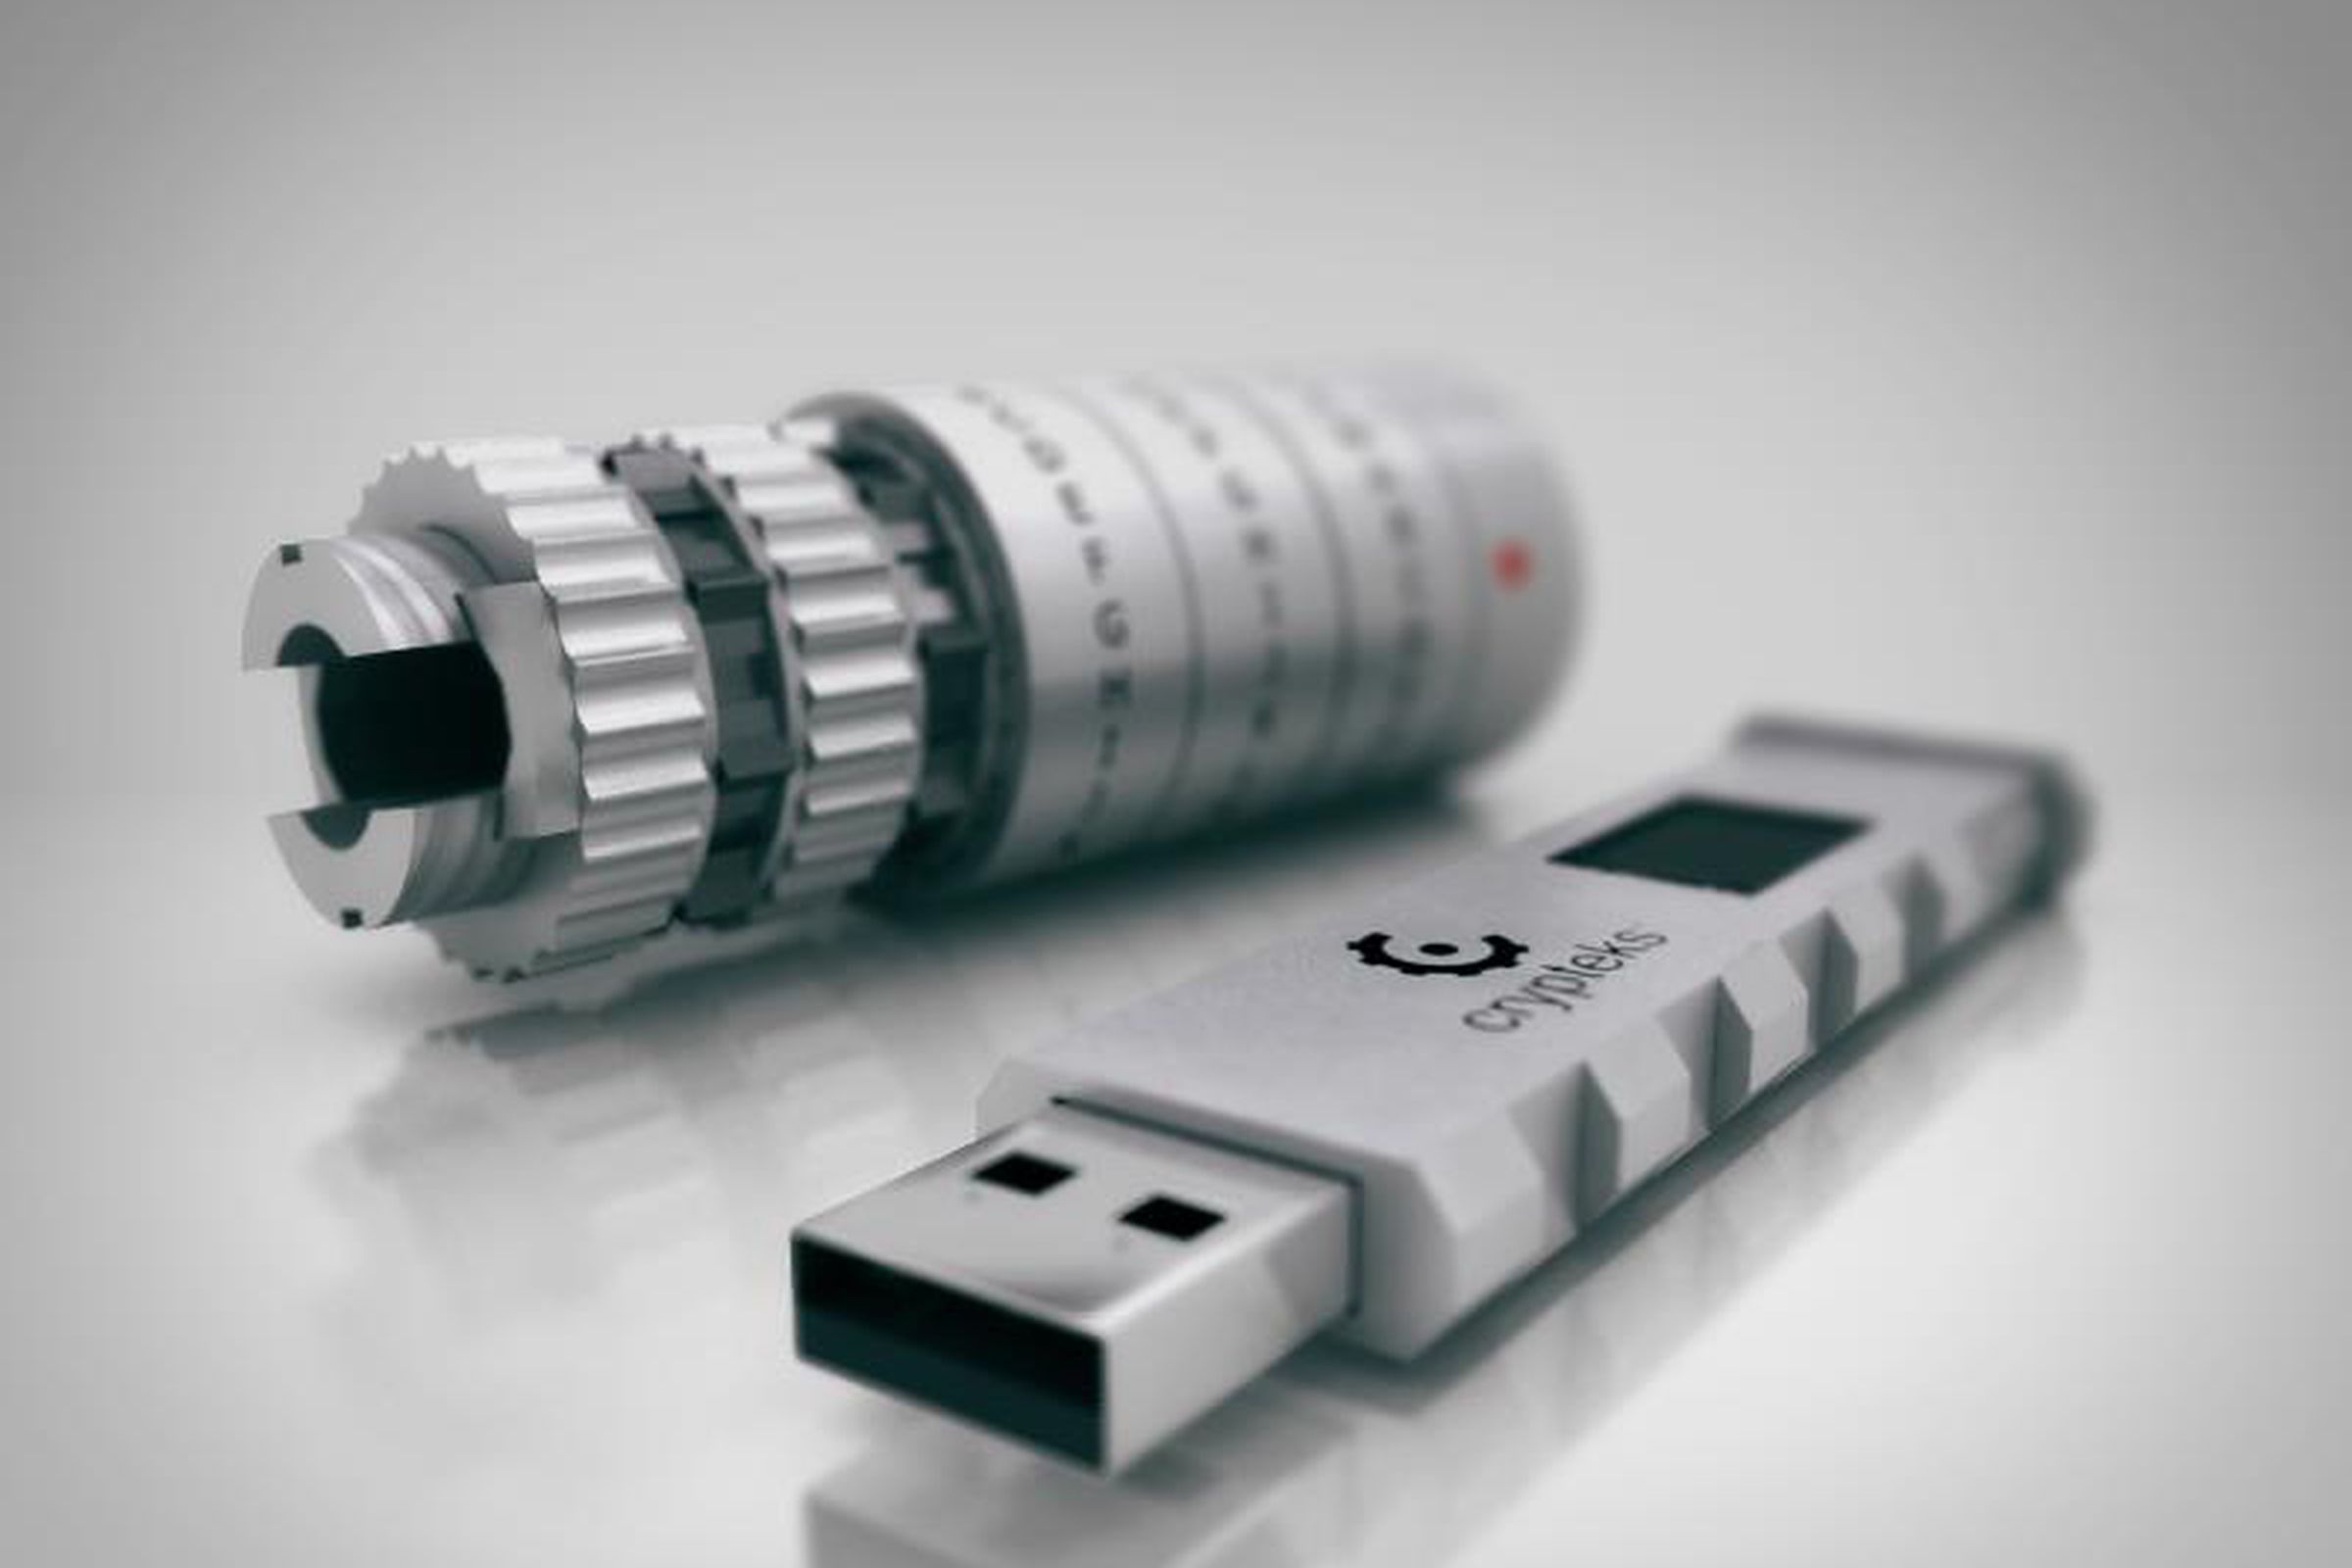 Crypteks USB drive